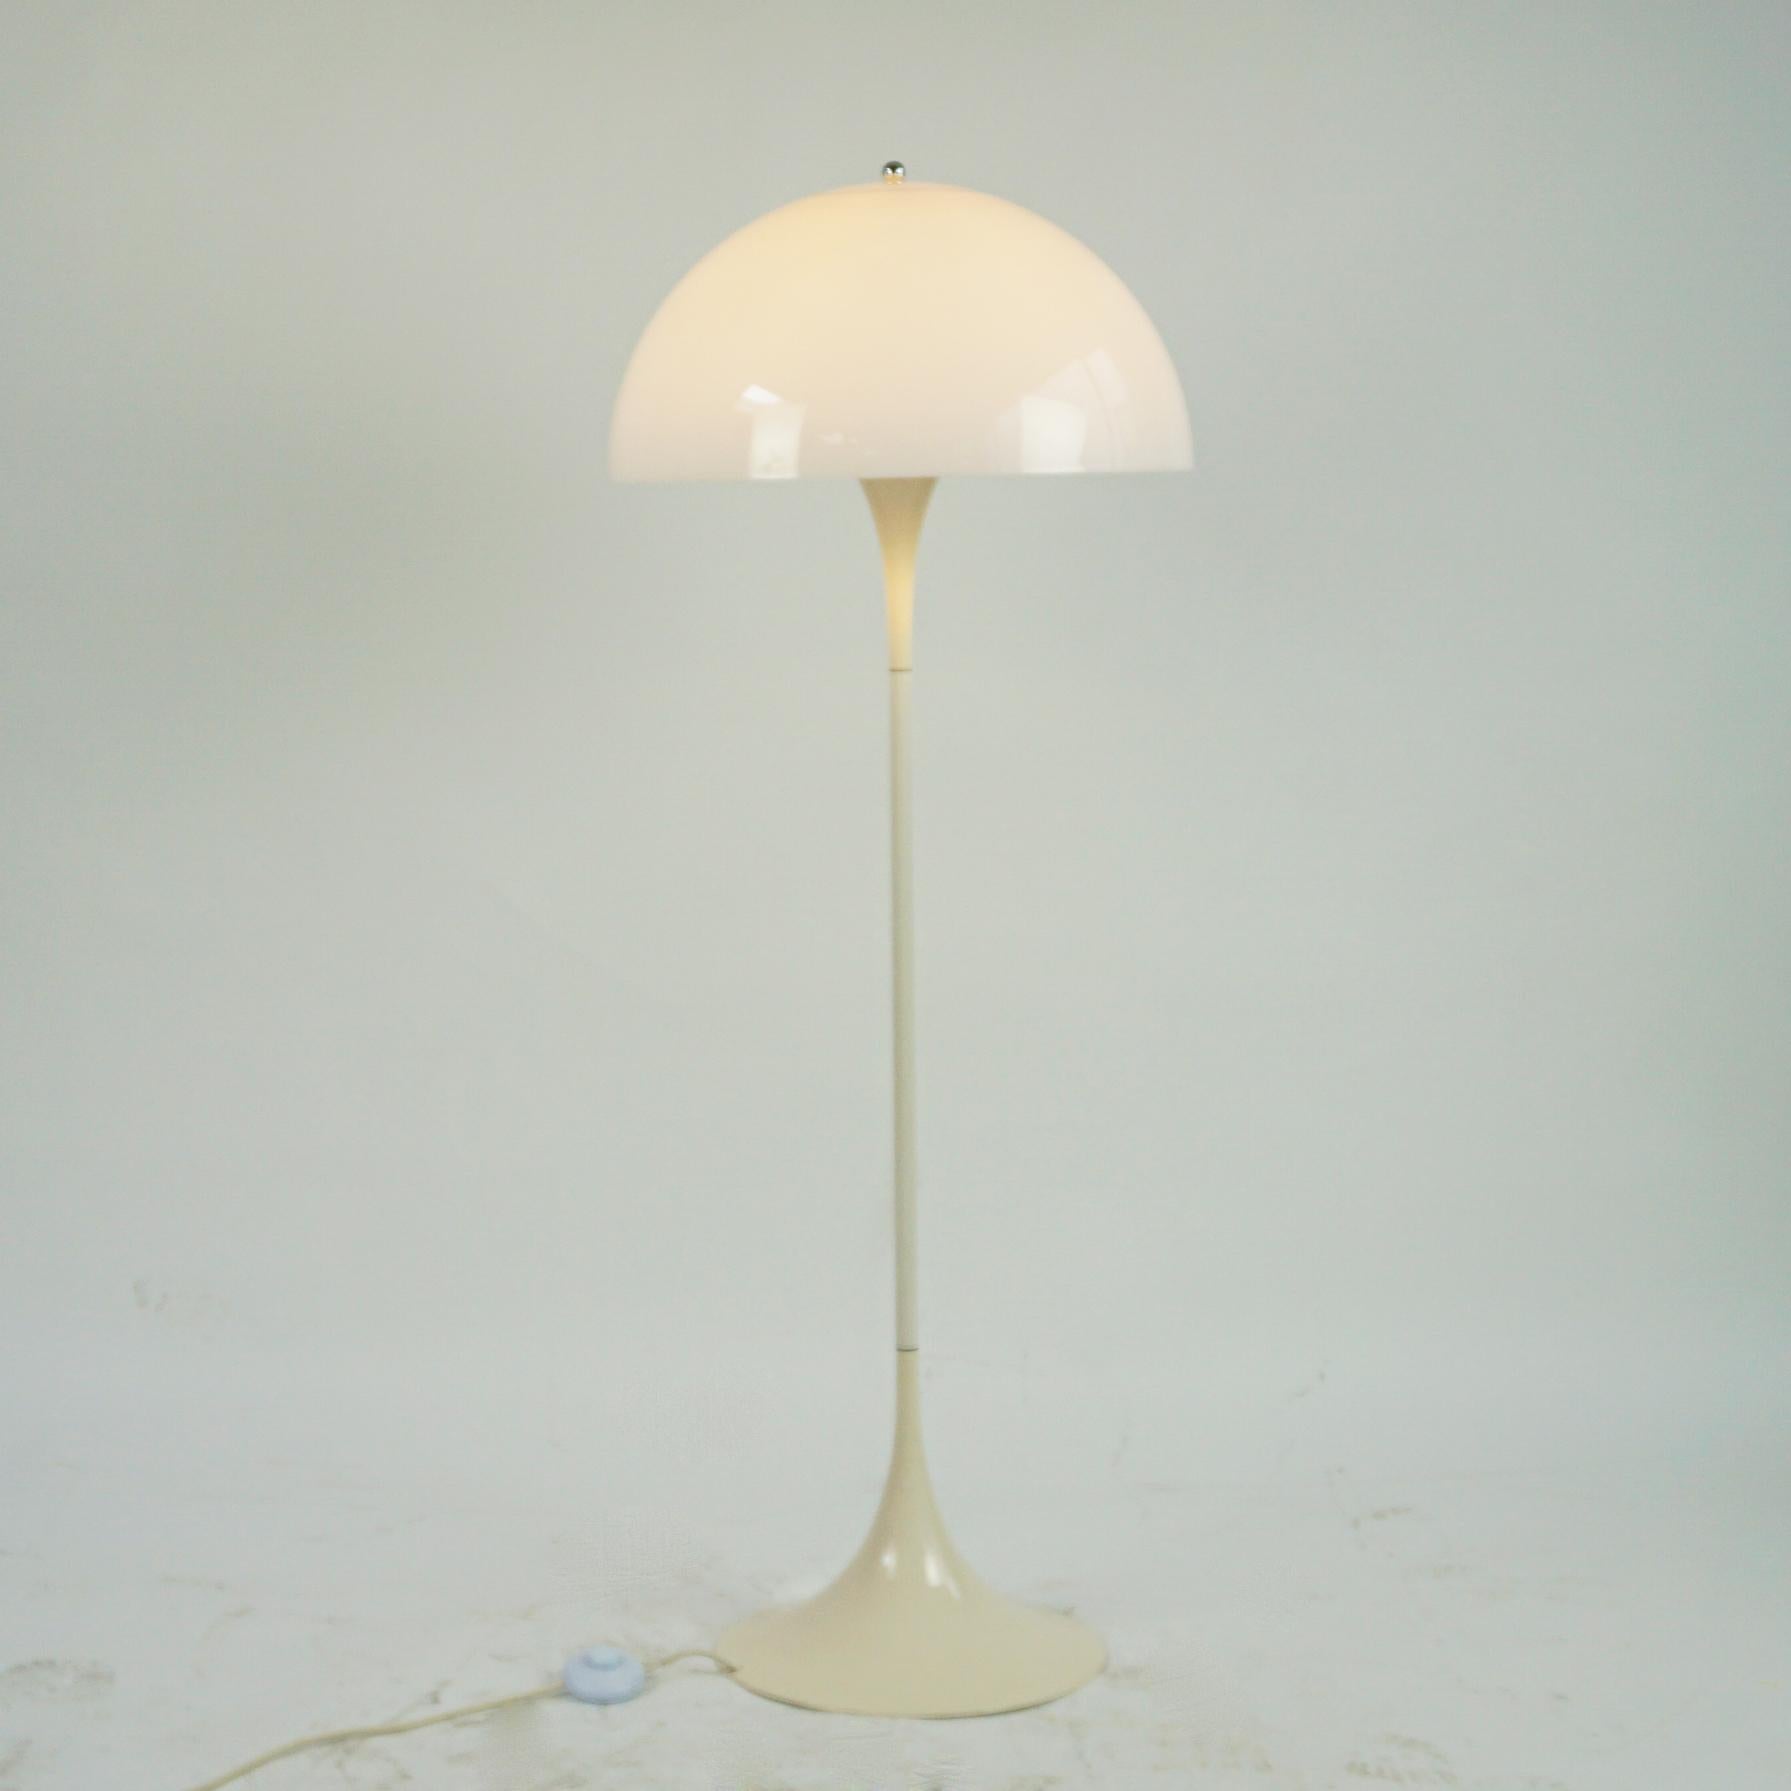 Late 20th Century White Plastic Panthella Floor Lamp by Verner Panton for Louis Poulsen Denmark